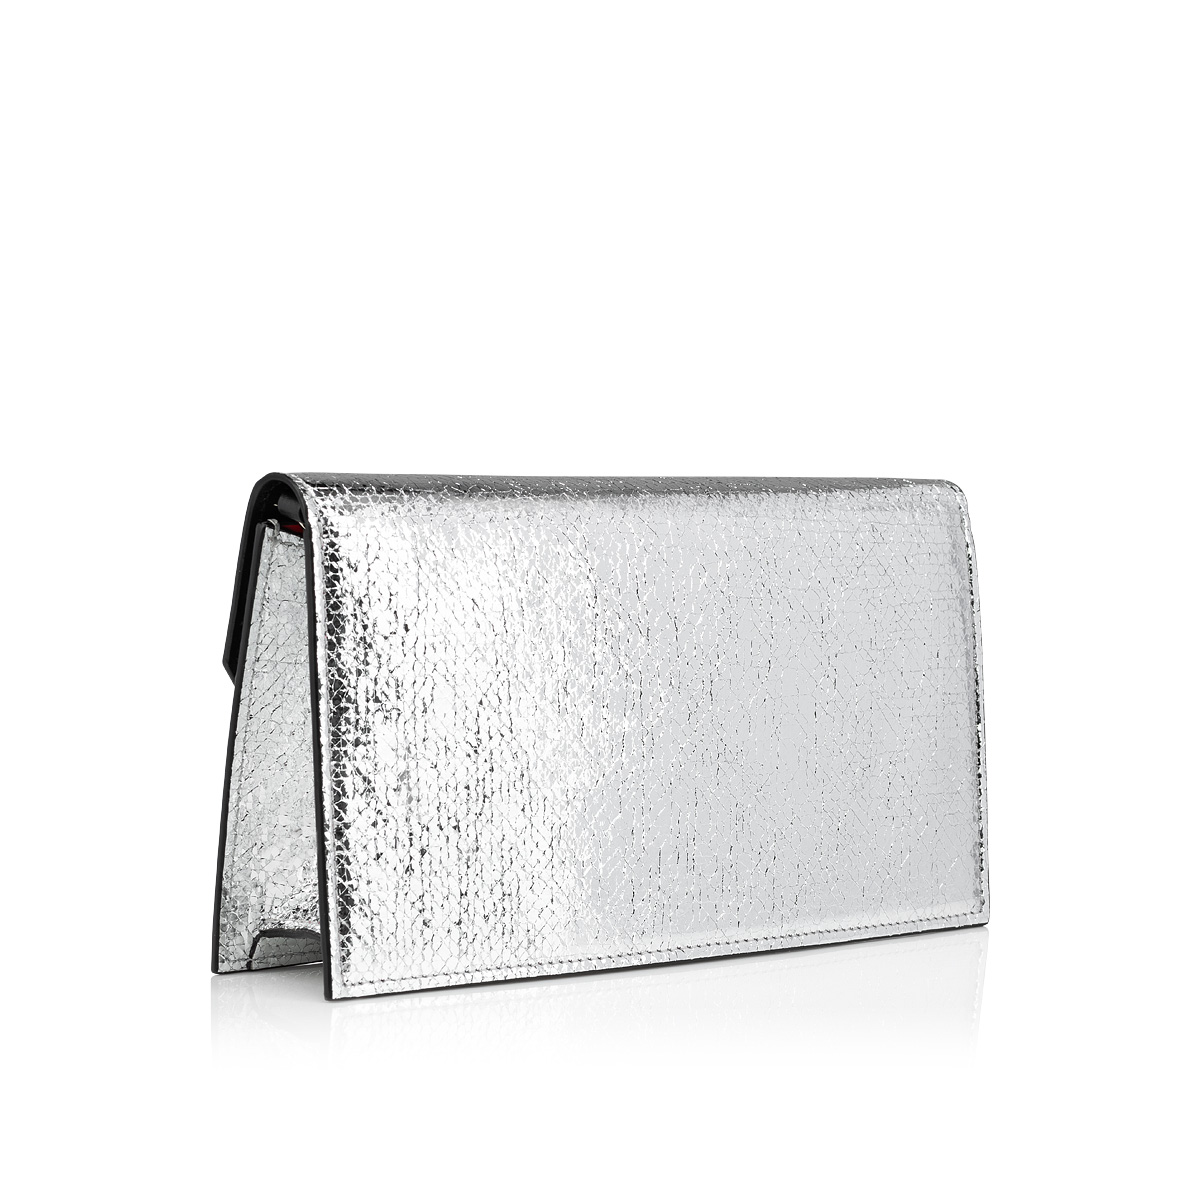 Louis Vuitton Miroir Mirror Pump Heels Silver Pool 6.5 US 36.5 Italy $1250